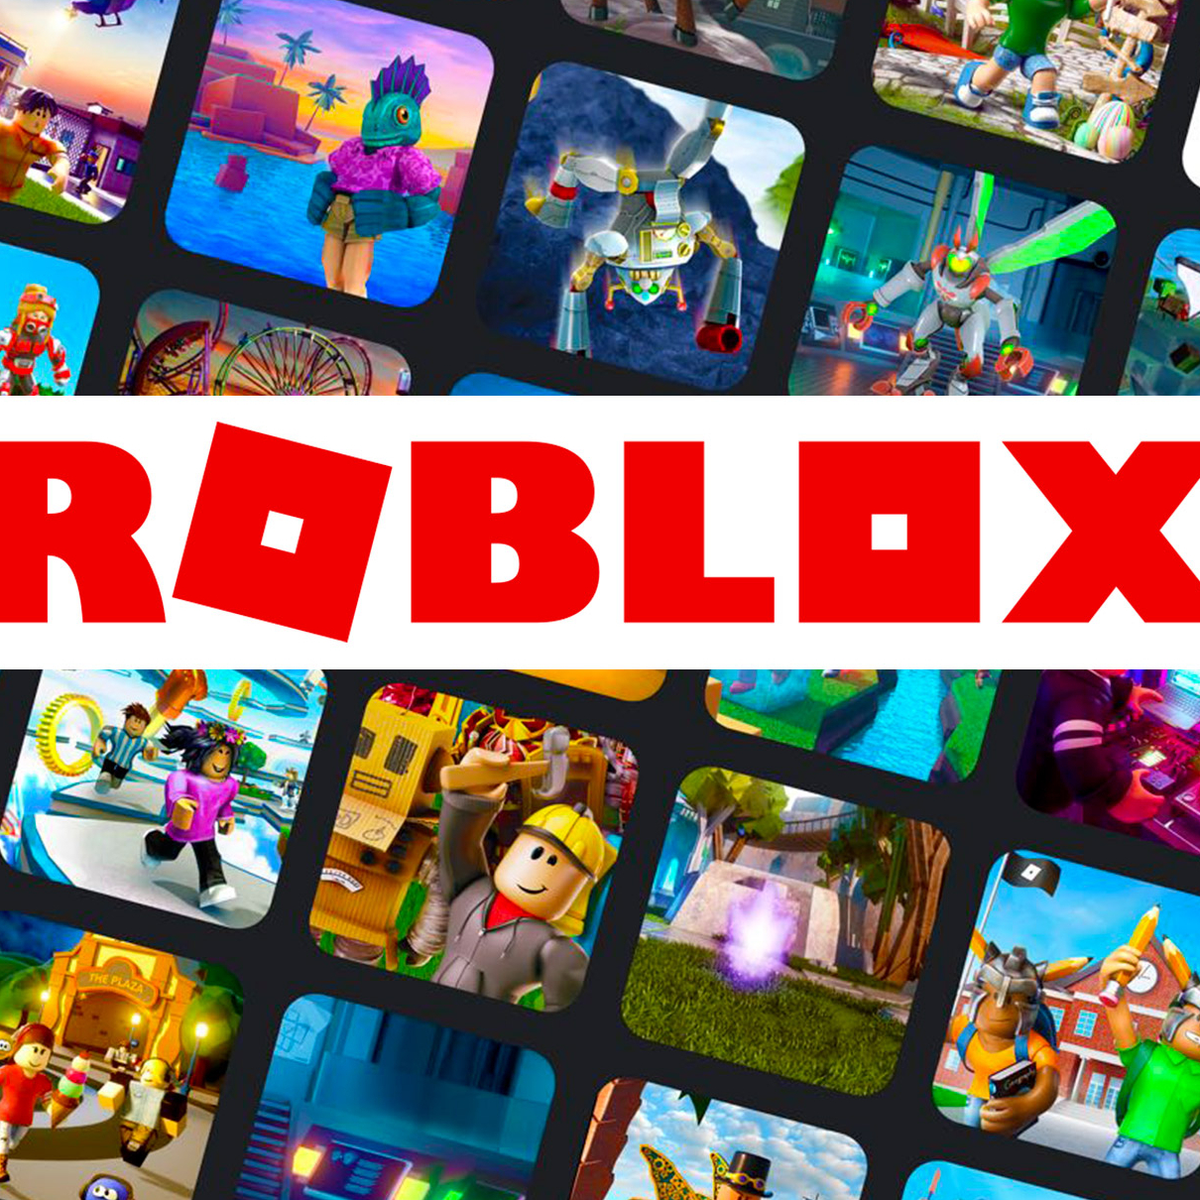 Roblox chegou aos consoles PlayStation como o terceiro maior